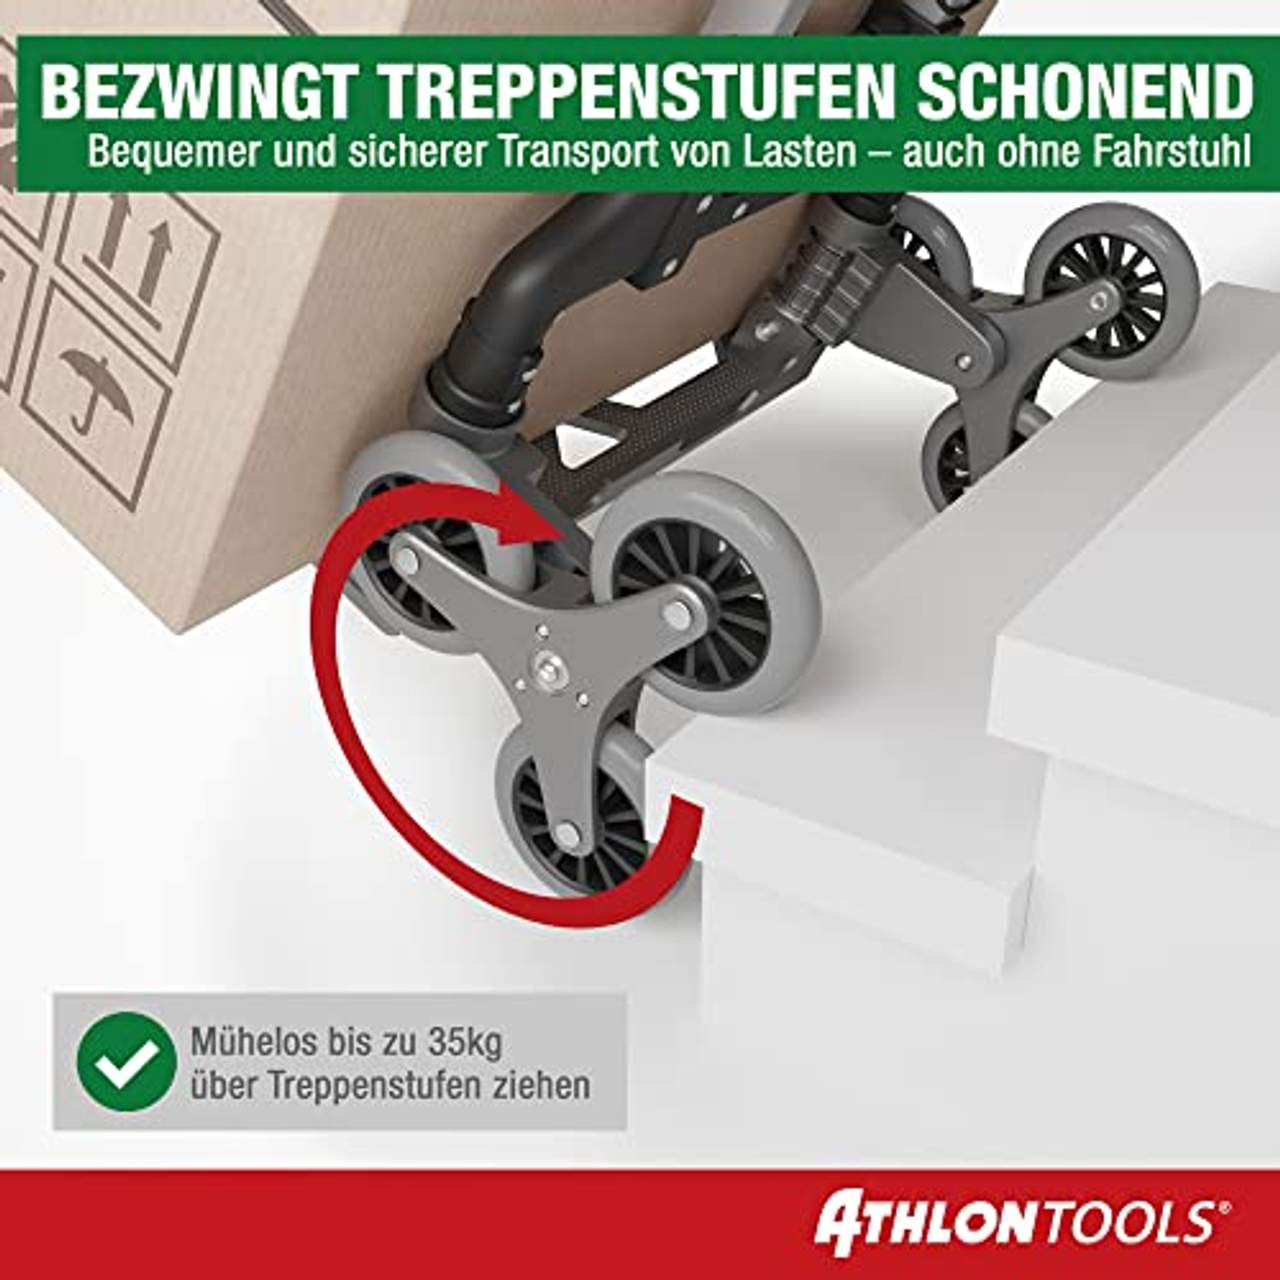 ATHLON TOOLS Aluminium Treppensteiger-Sackkarre klappbar